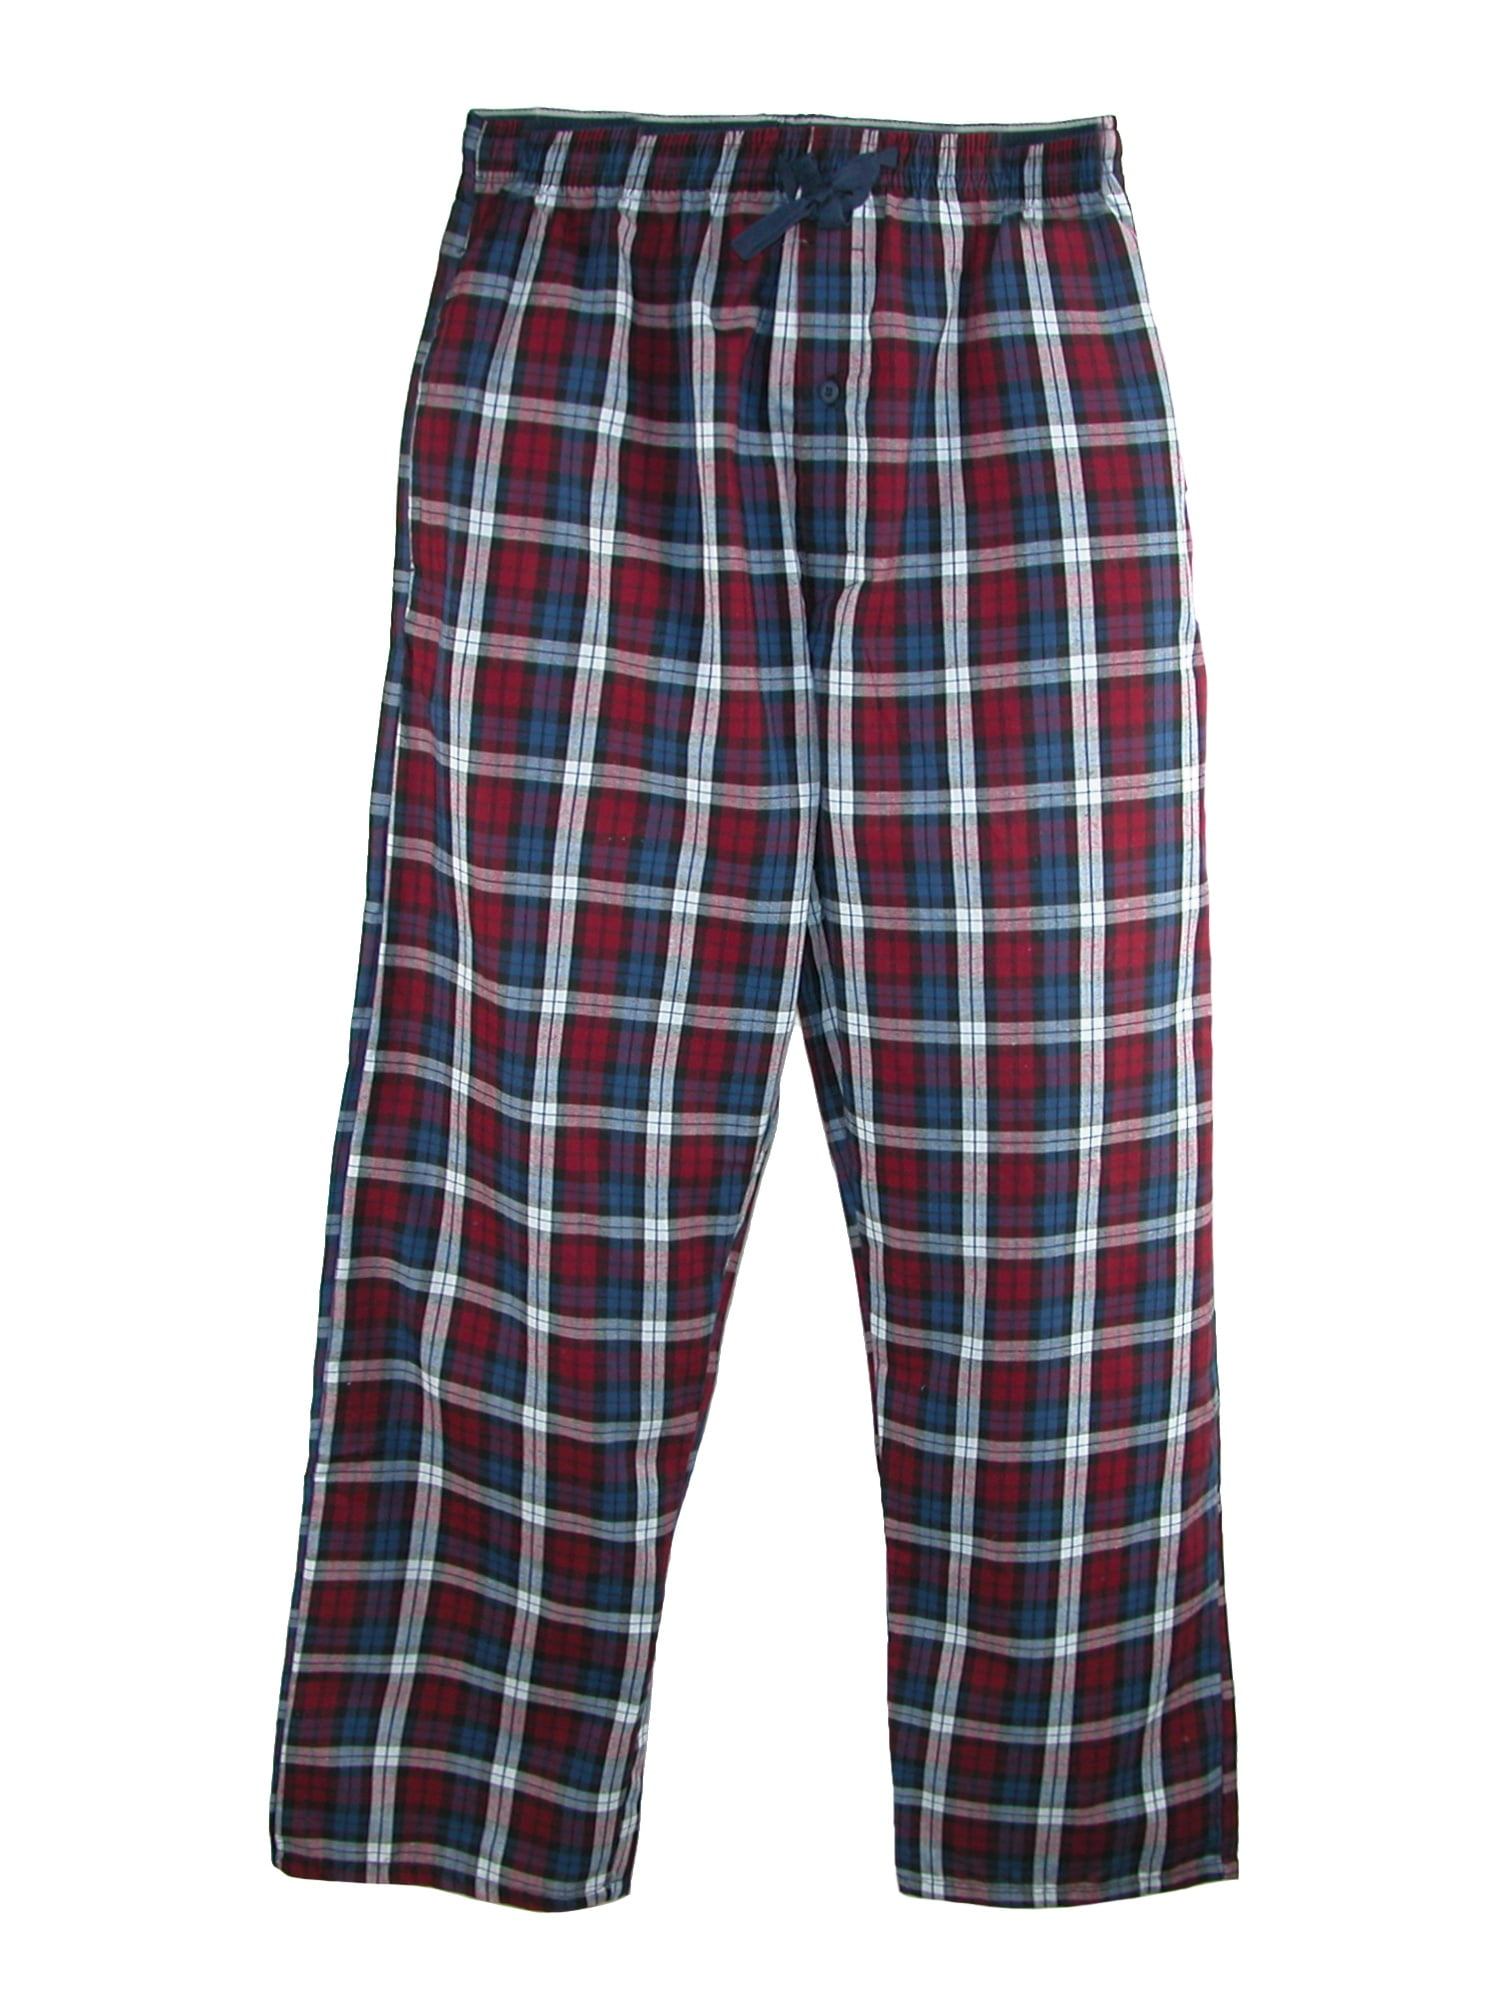 Hanes - Hanes Men's Tall Size Woven Lounge Pajama Pants - Walmart.com ...